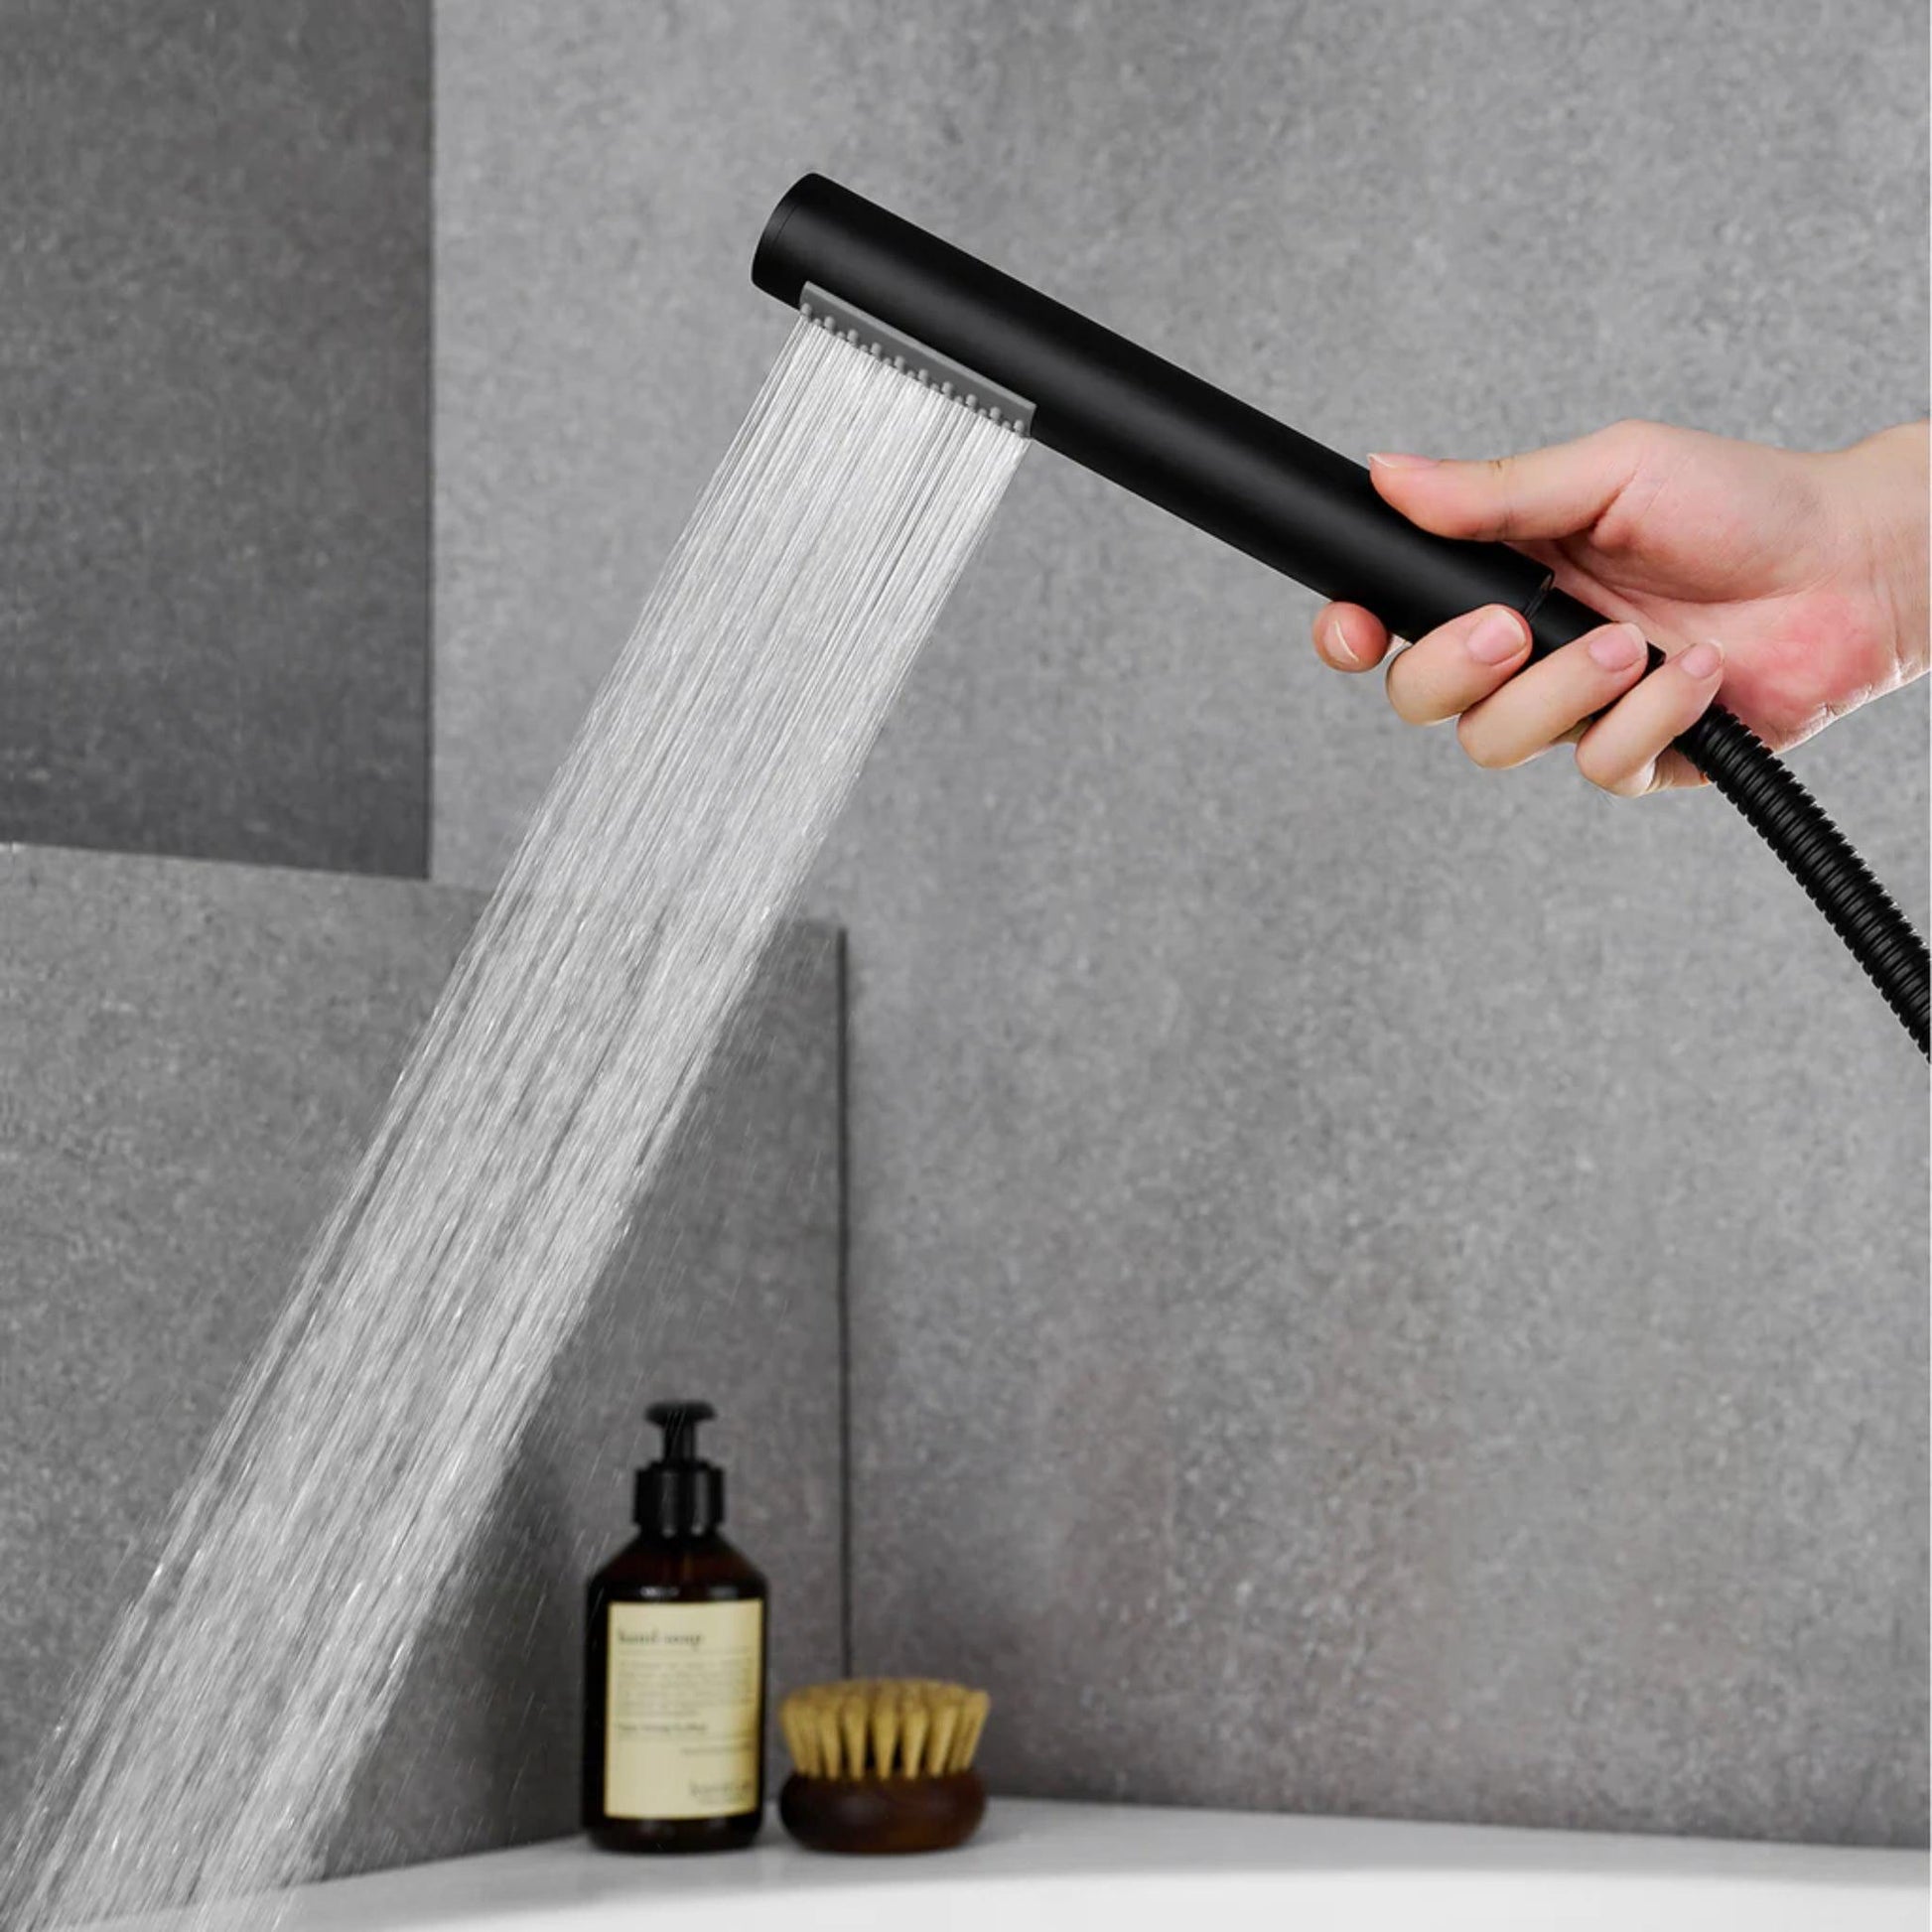 Altair Recea Matte Black Triple Handle Deck-mounted Bathtub Faucet With Handshower and Diverter